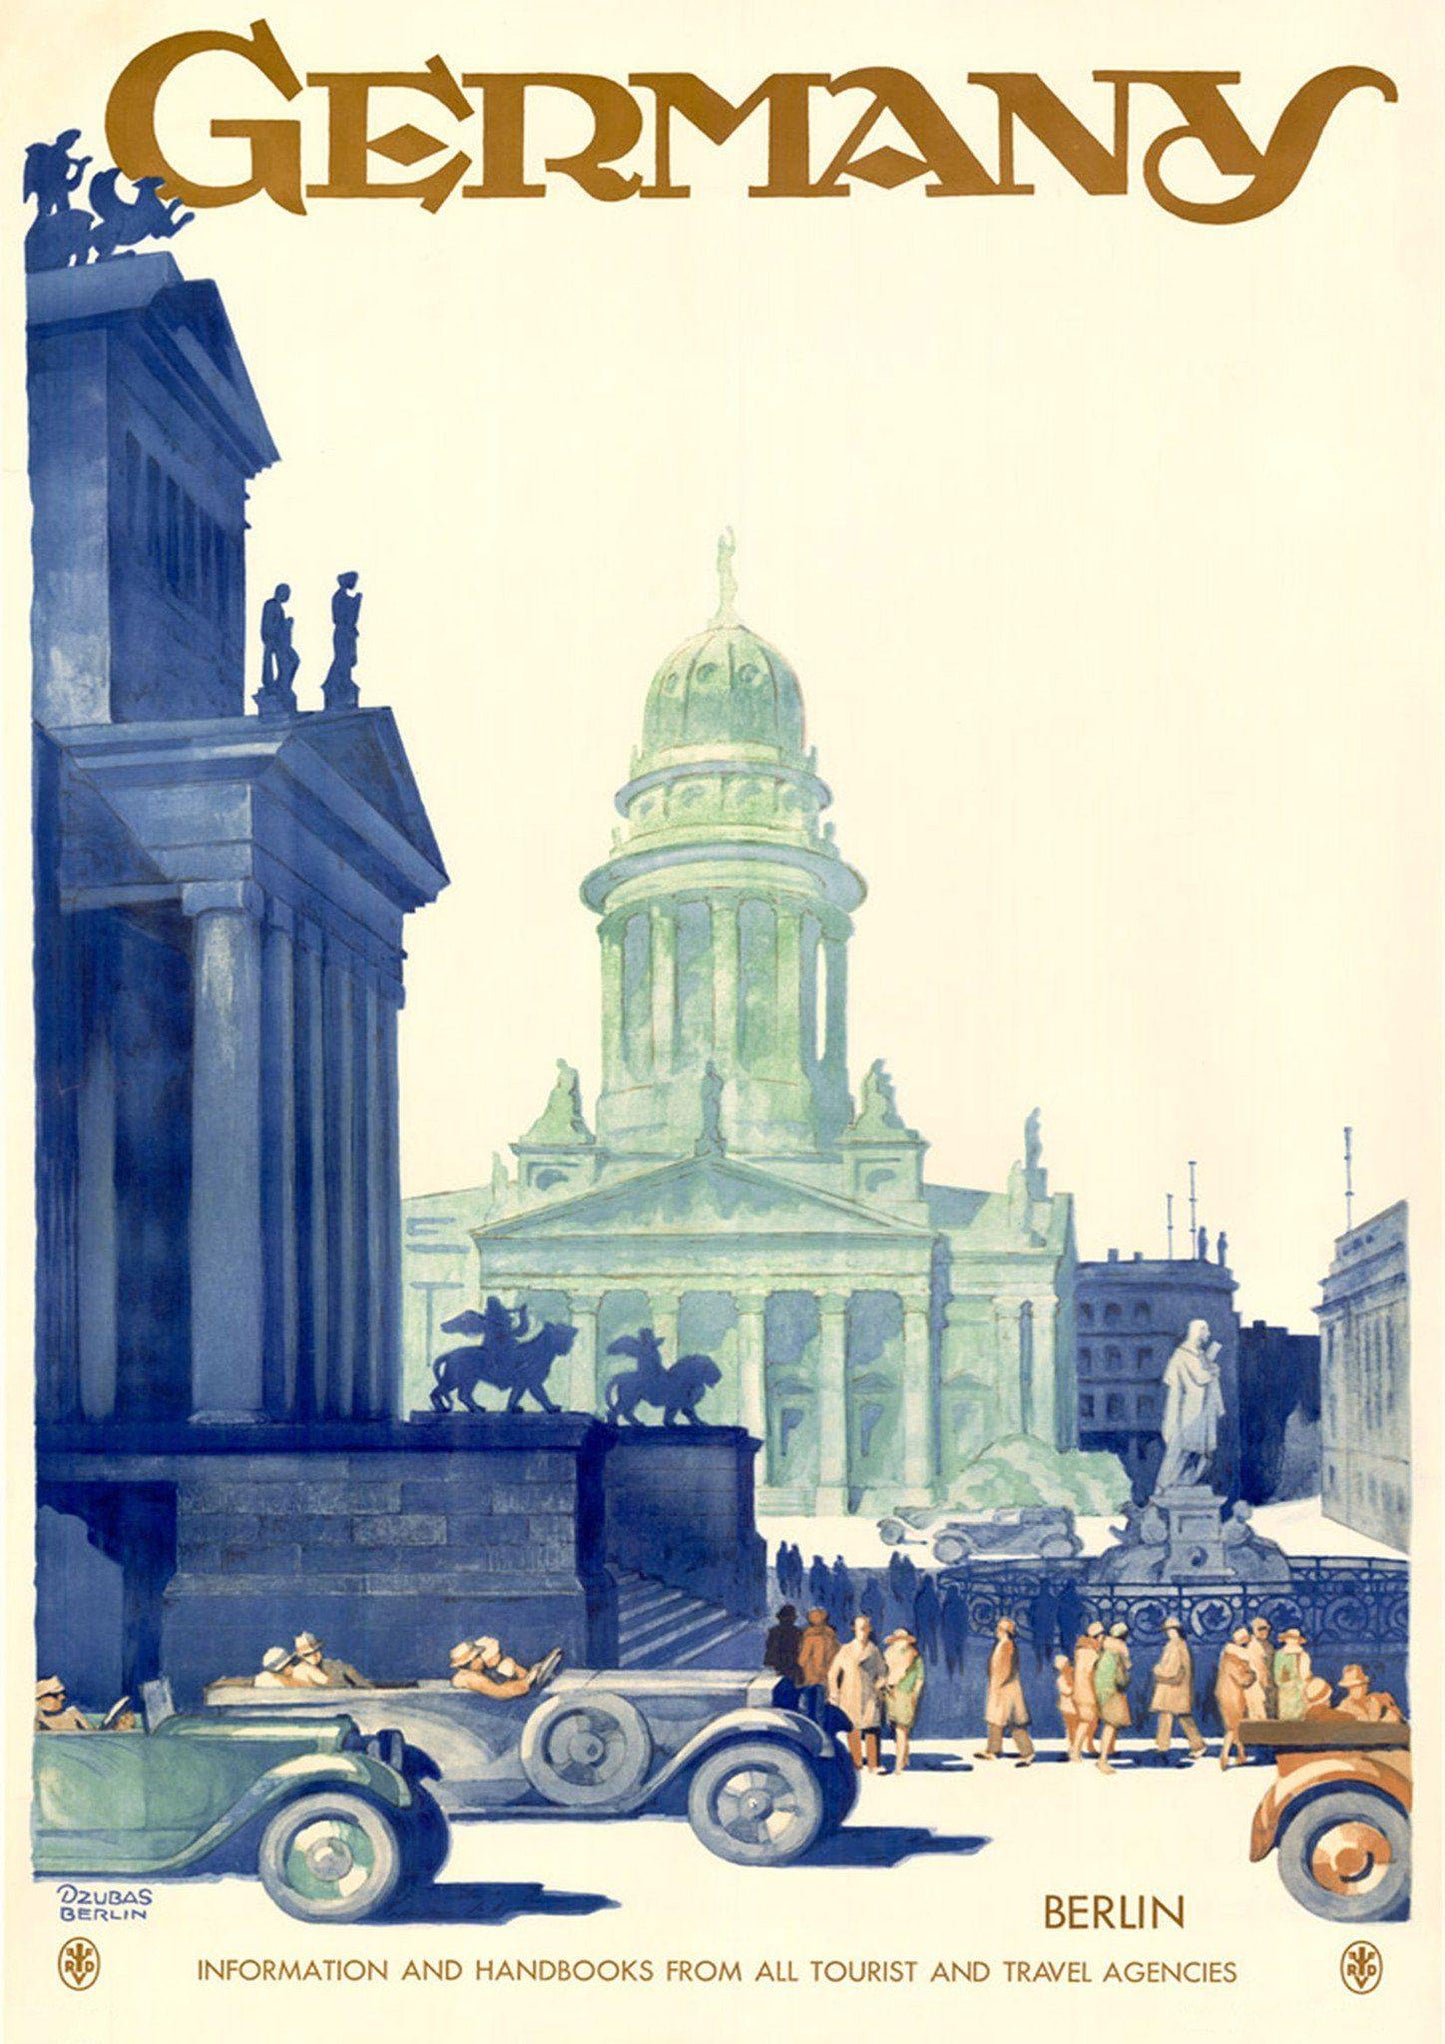 BERLIN TRAVEL POSTER: Vintage Germany Advert, Art Print Wall Hanging - Pimlico Prints